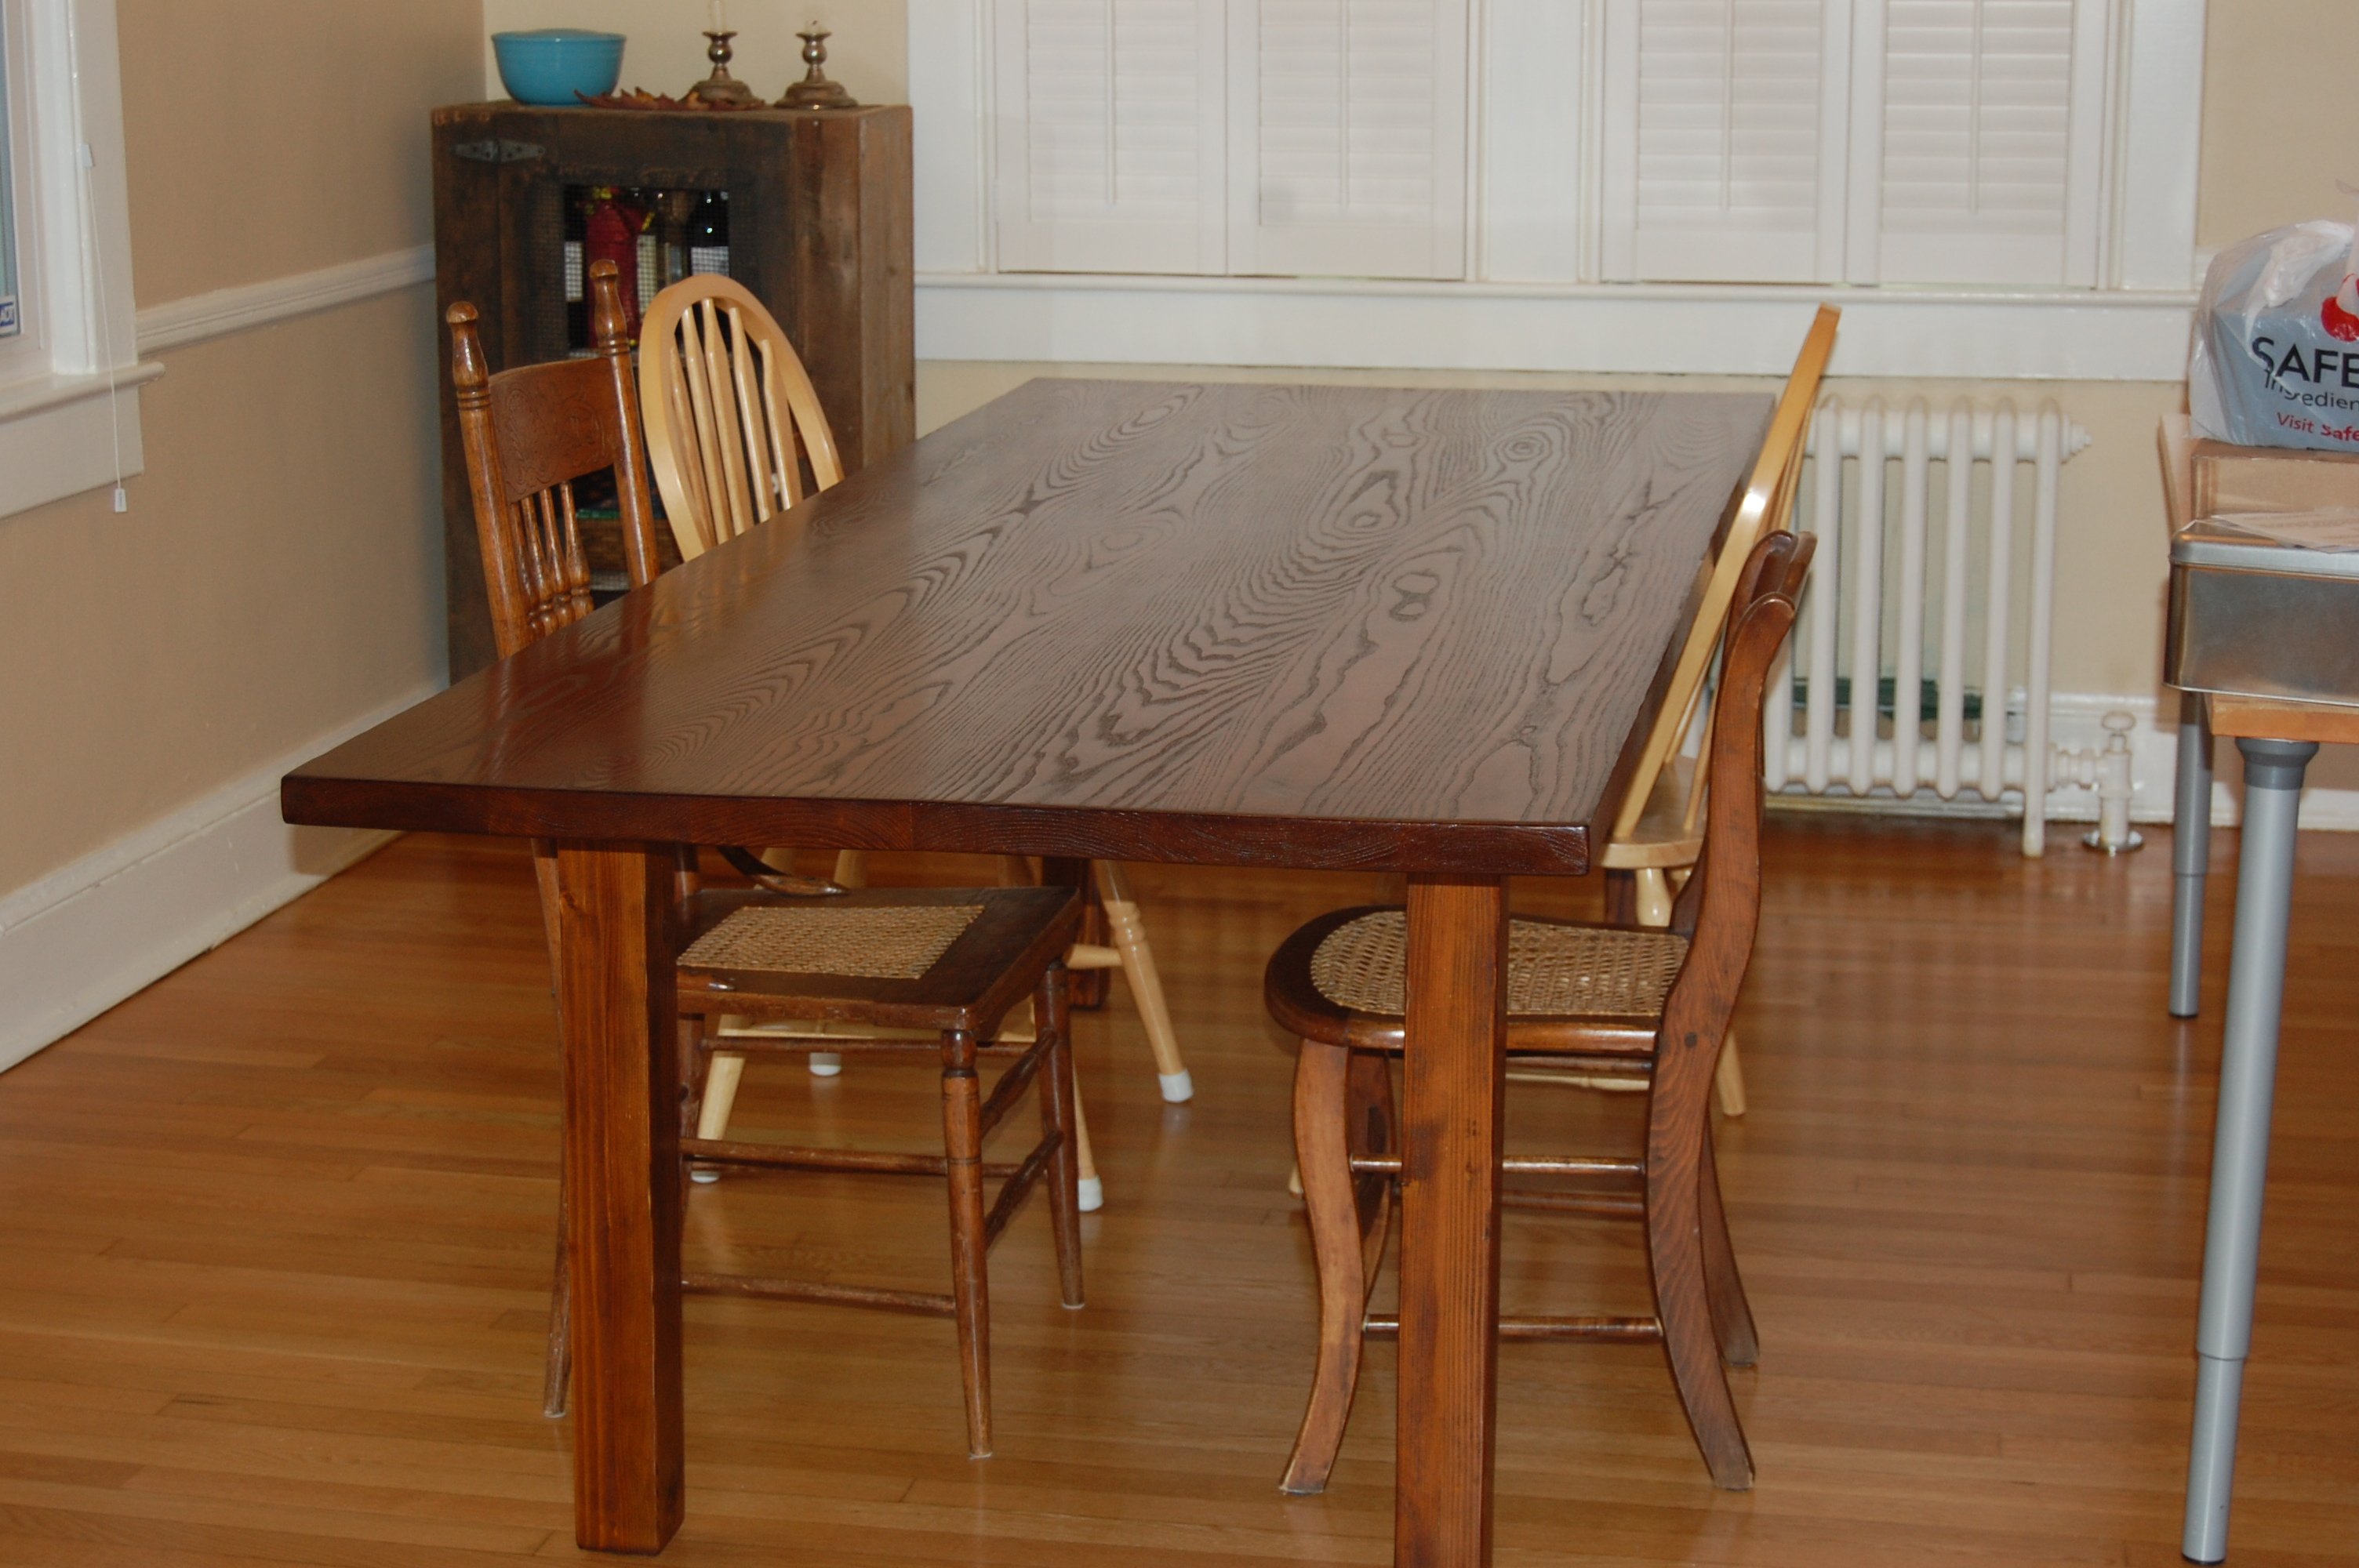 Farmhouse Inspired Table Ana White, Craigslist Dining Room Set